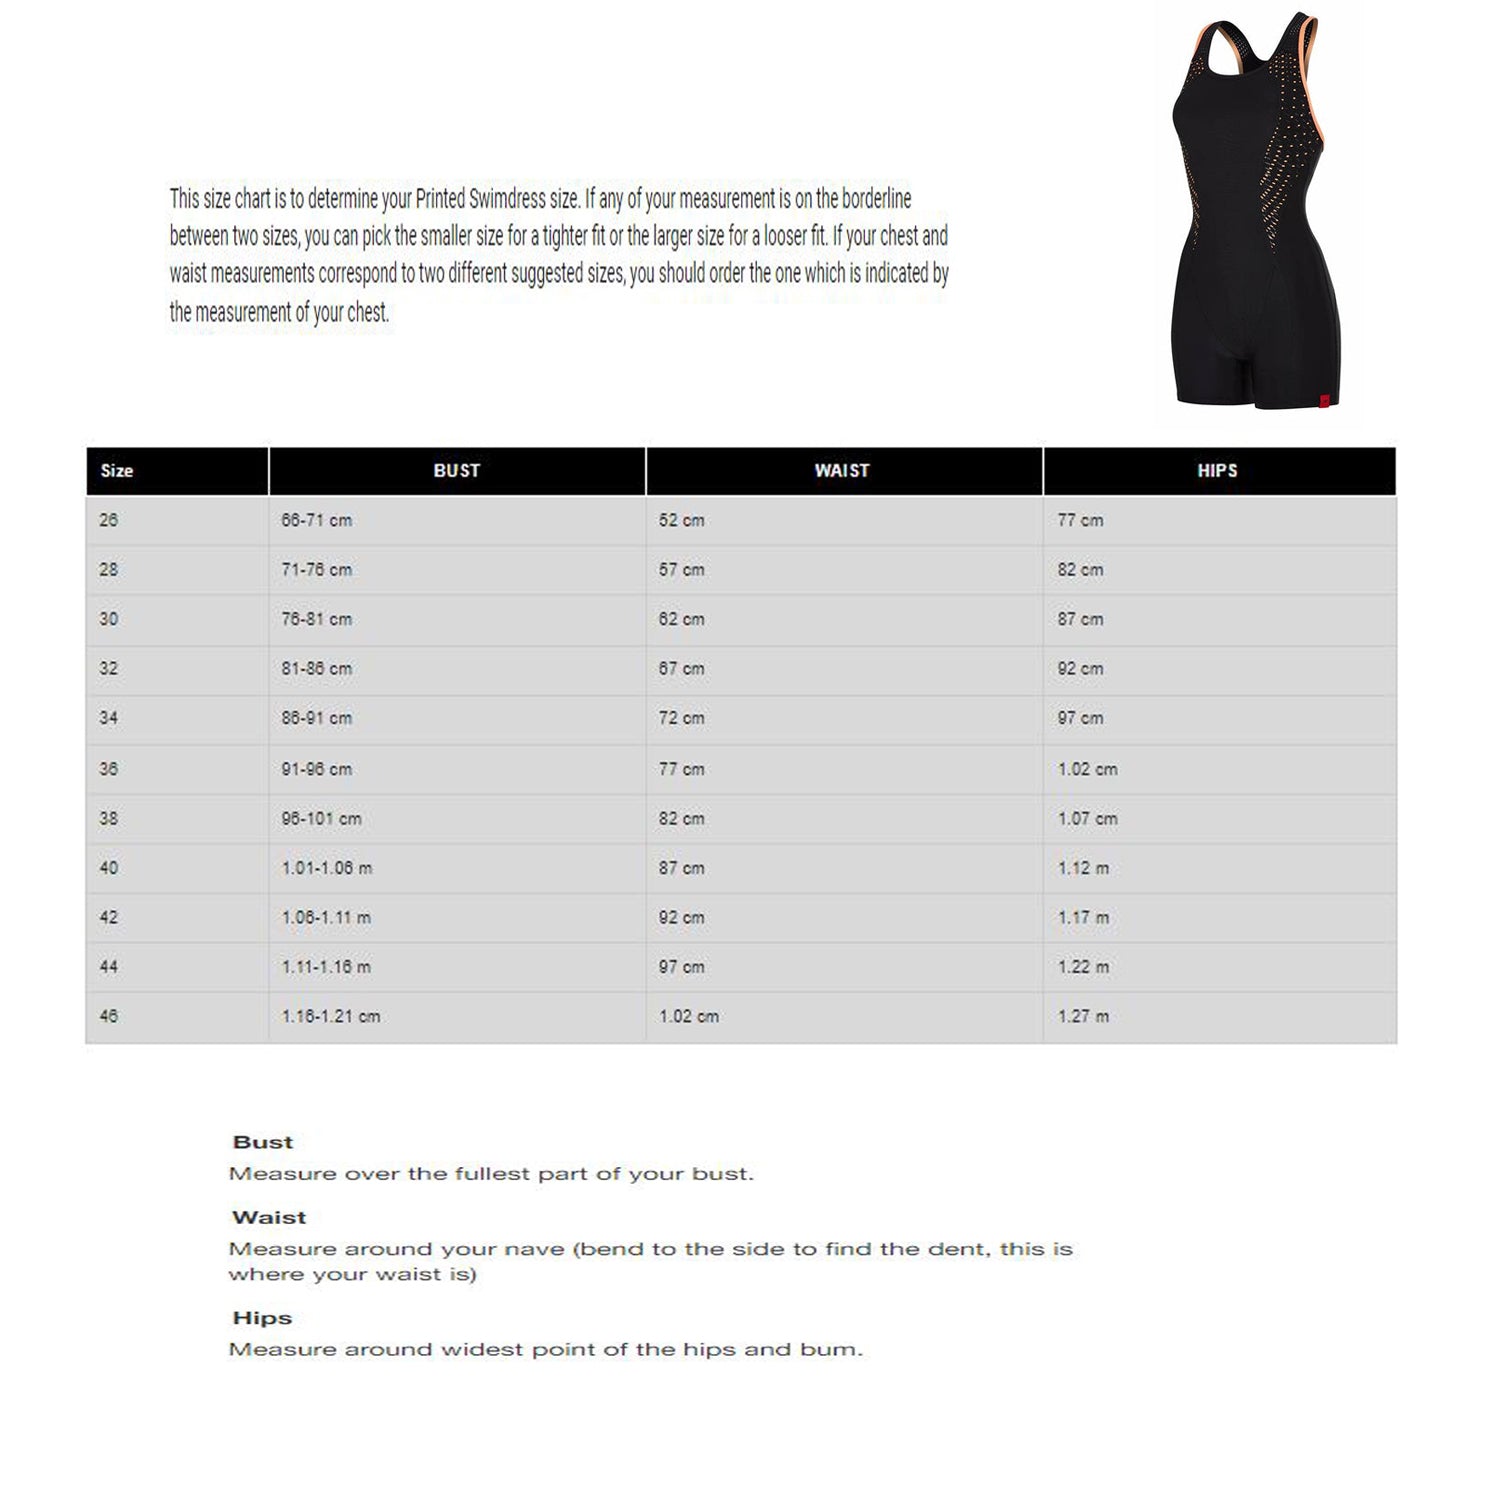 Speedo Female Swimwear Essential Splice Racerback Lidsuit - Best Price online Prokicksports.com